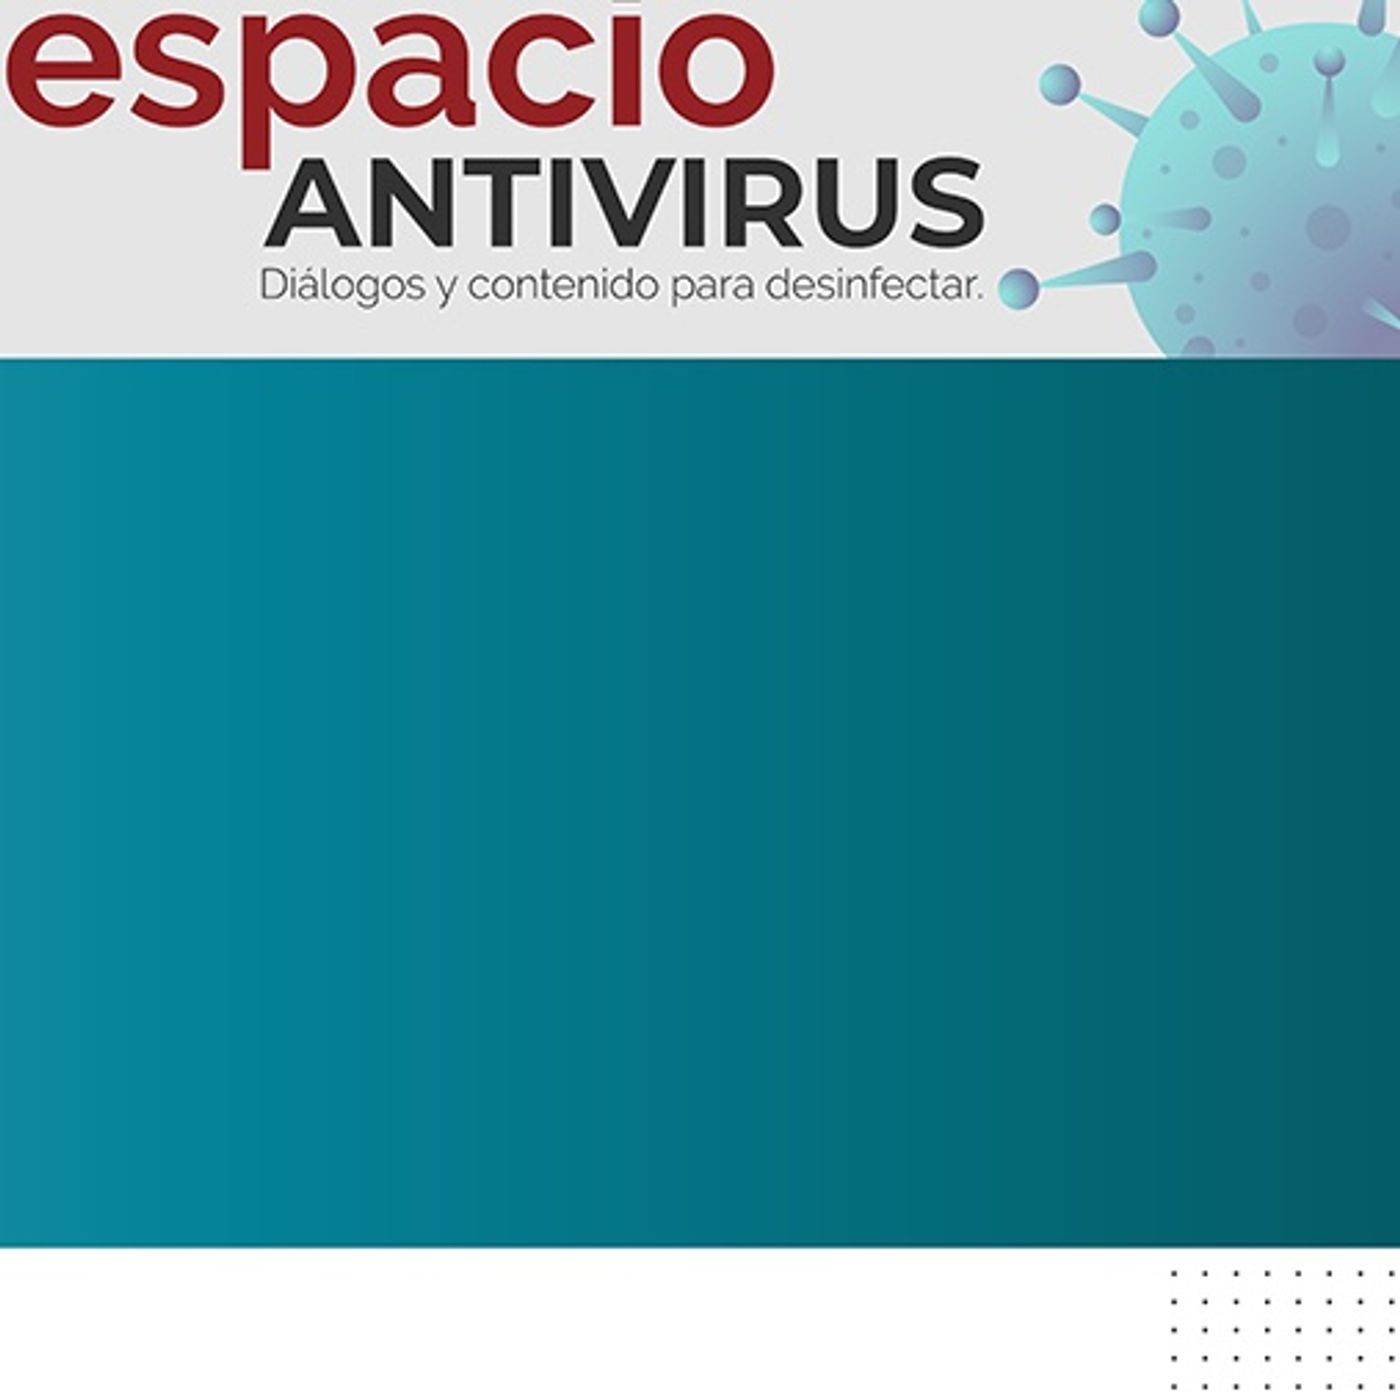 Espacio Antivirus